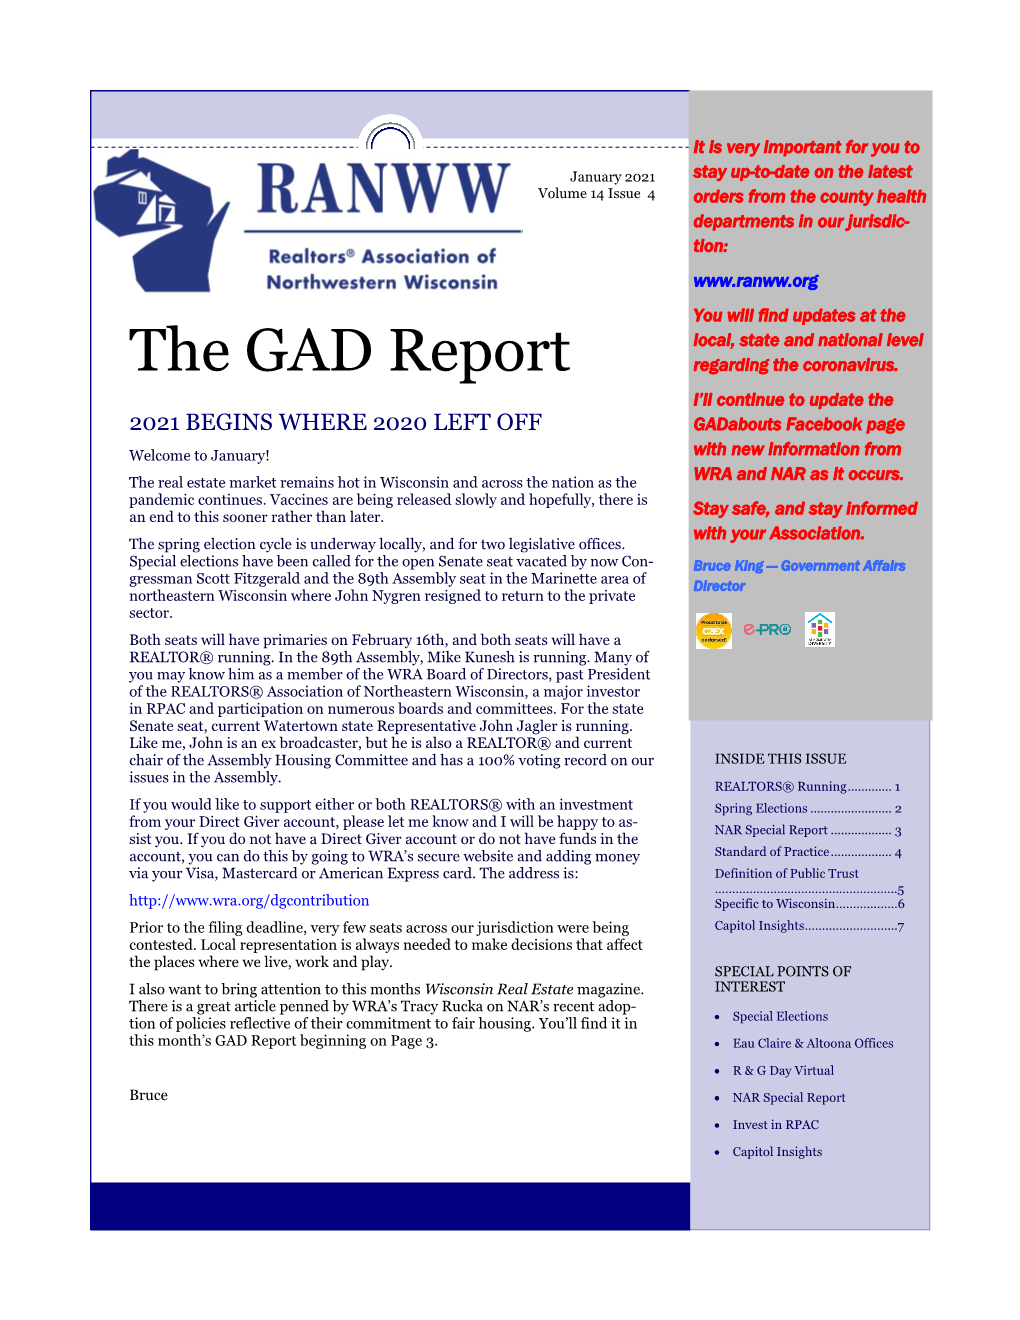 January 2021 GAD Report